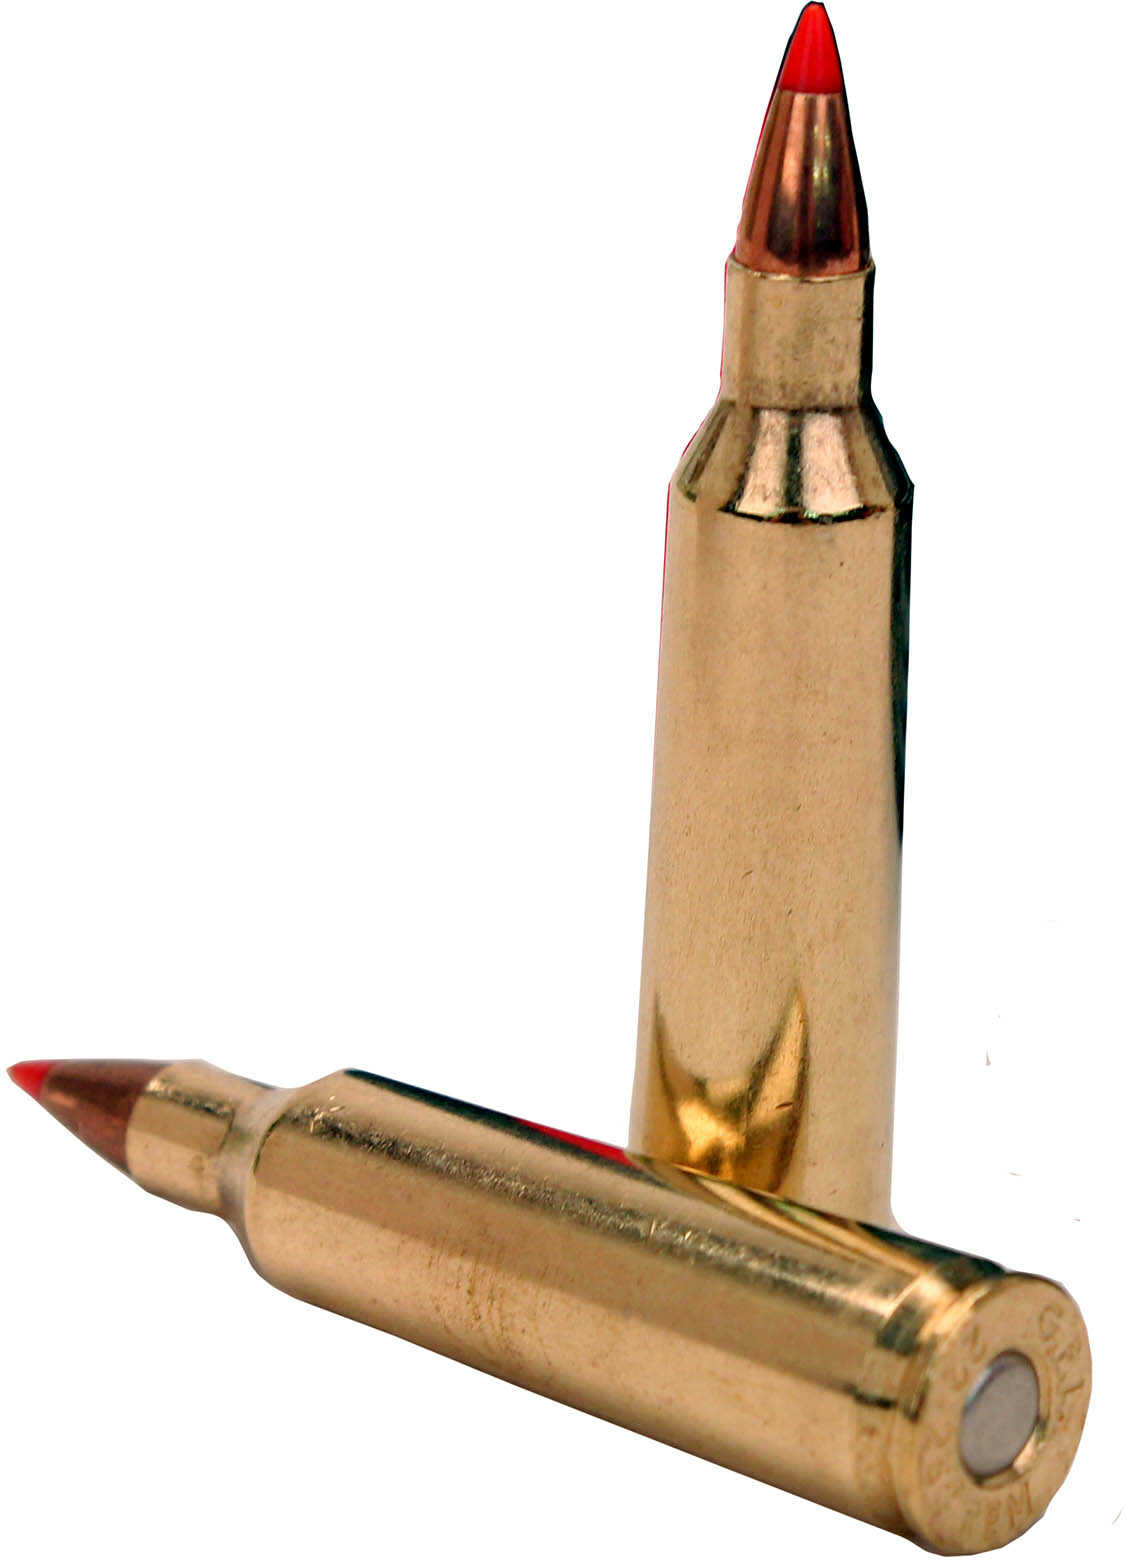 22-250 Remington 20 Rounds Ammunition Fiocchi Ammo 55 Grain V-Max